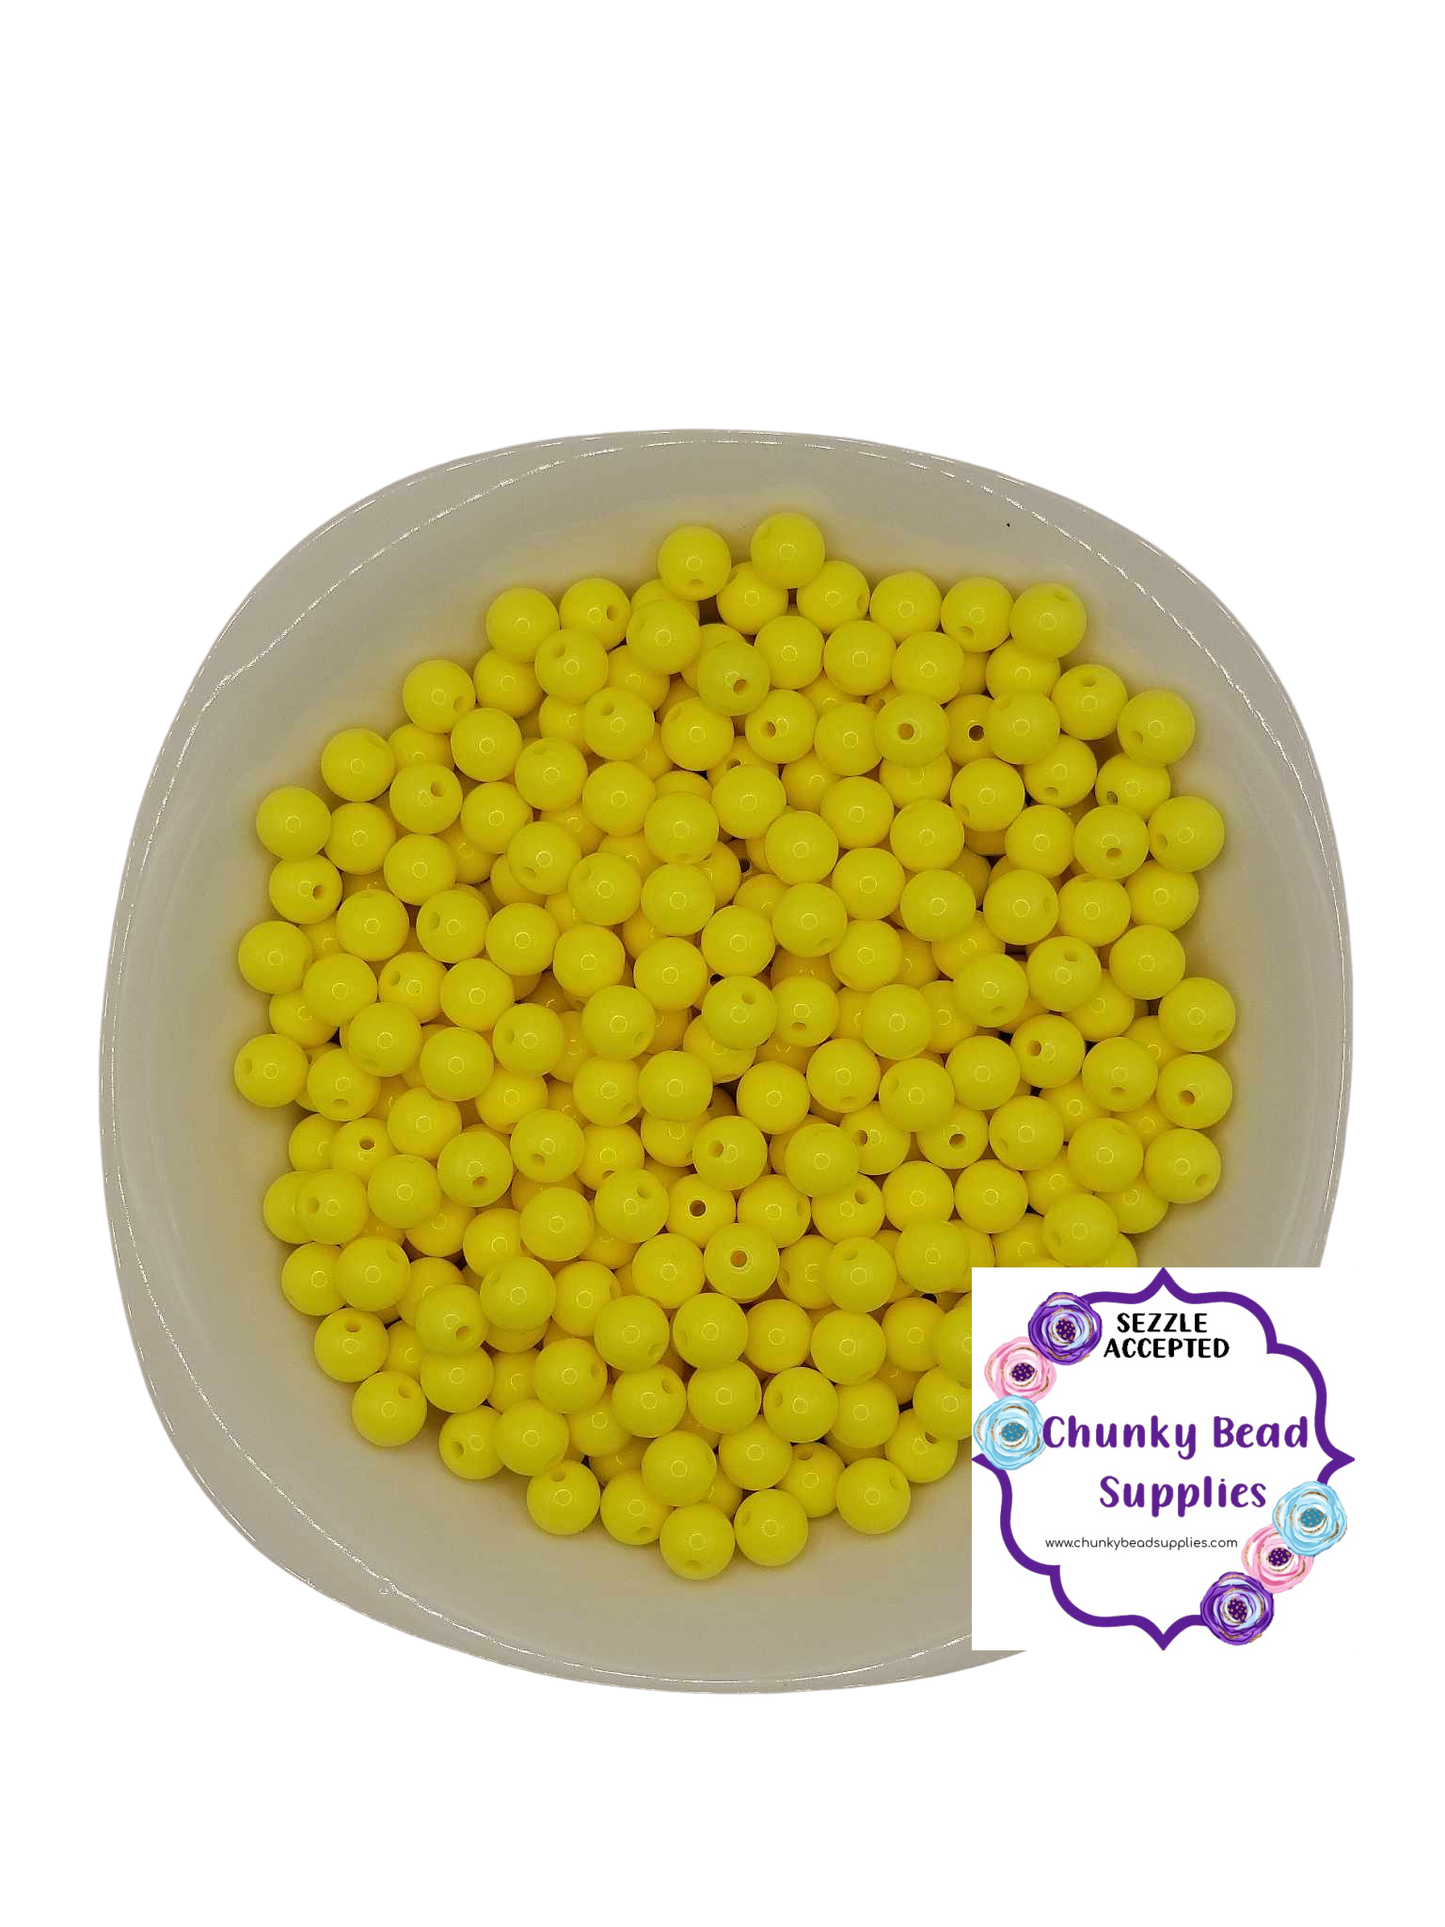 12mm “Lemon Yellow” Solid Acrylic Beads, CBS Chunky Bead Supplies, Gumball Beads, Chunky Bubblegum Beads